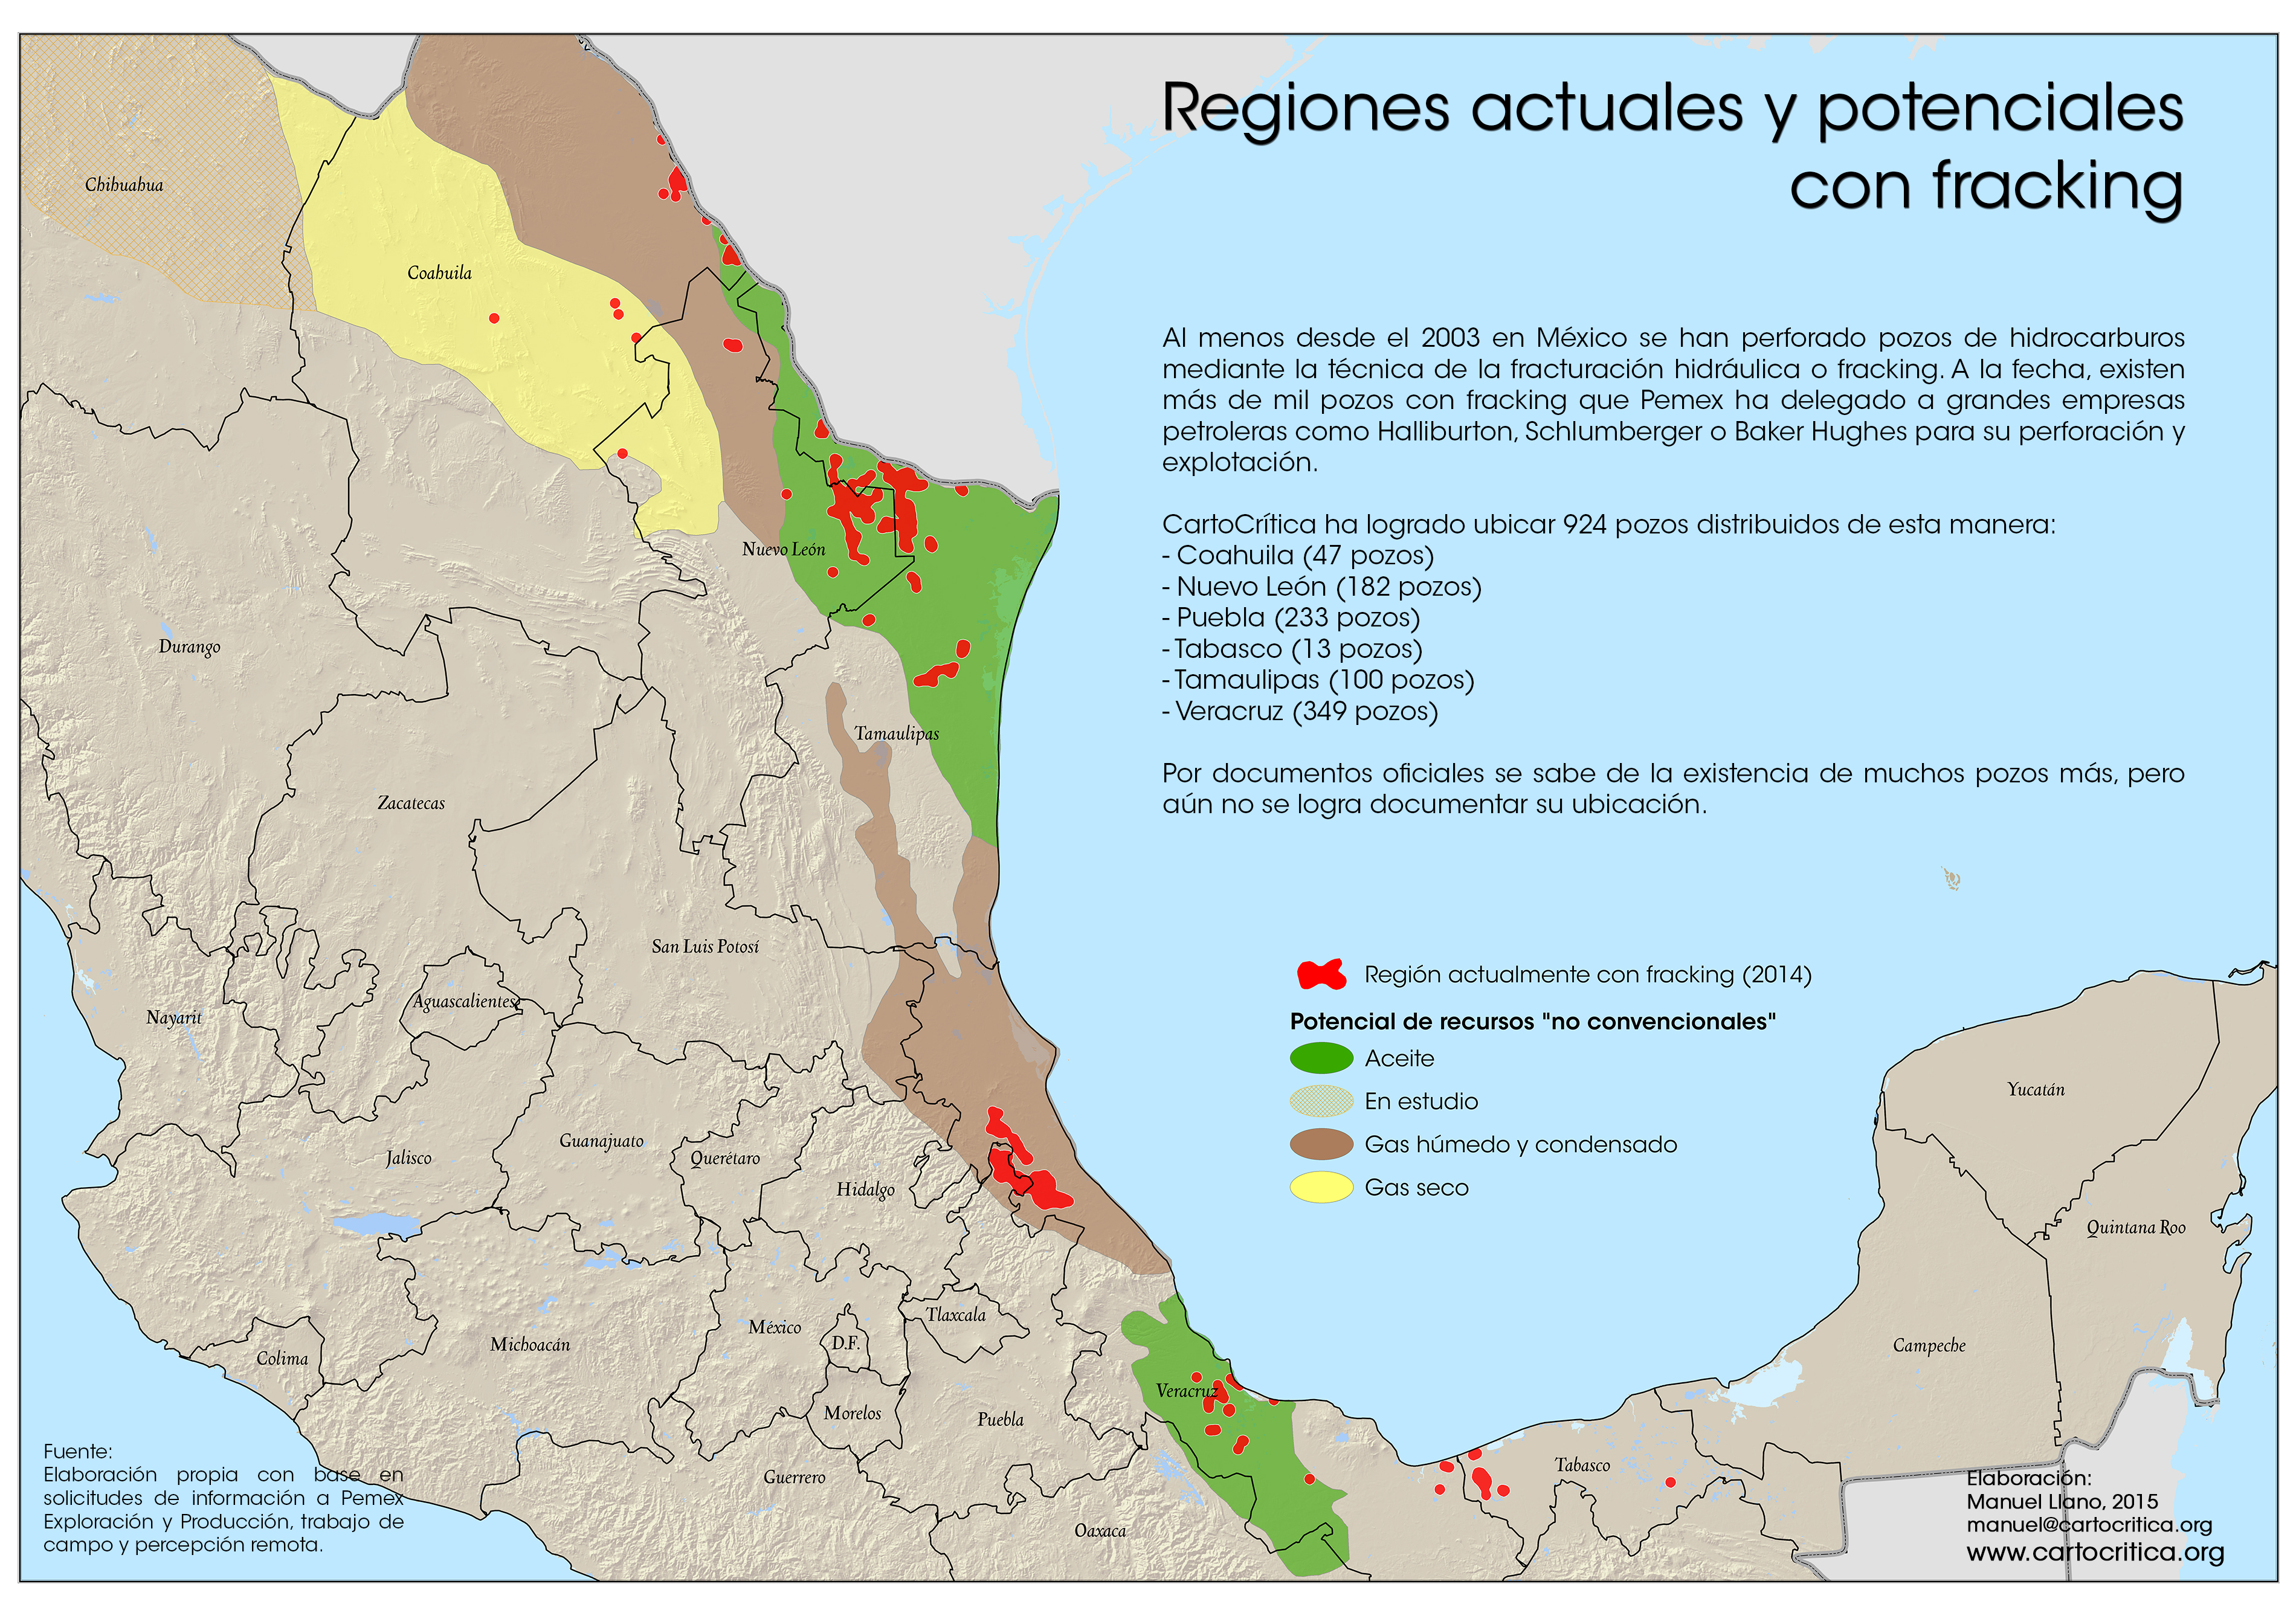 http://www.cartocritica.org.mx/wp-content/uploads/2015/05/Mapa-fracking-M%C3%A9xico-baja.jpg